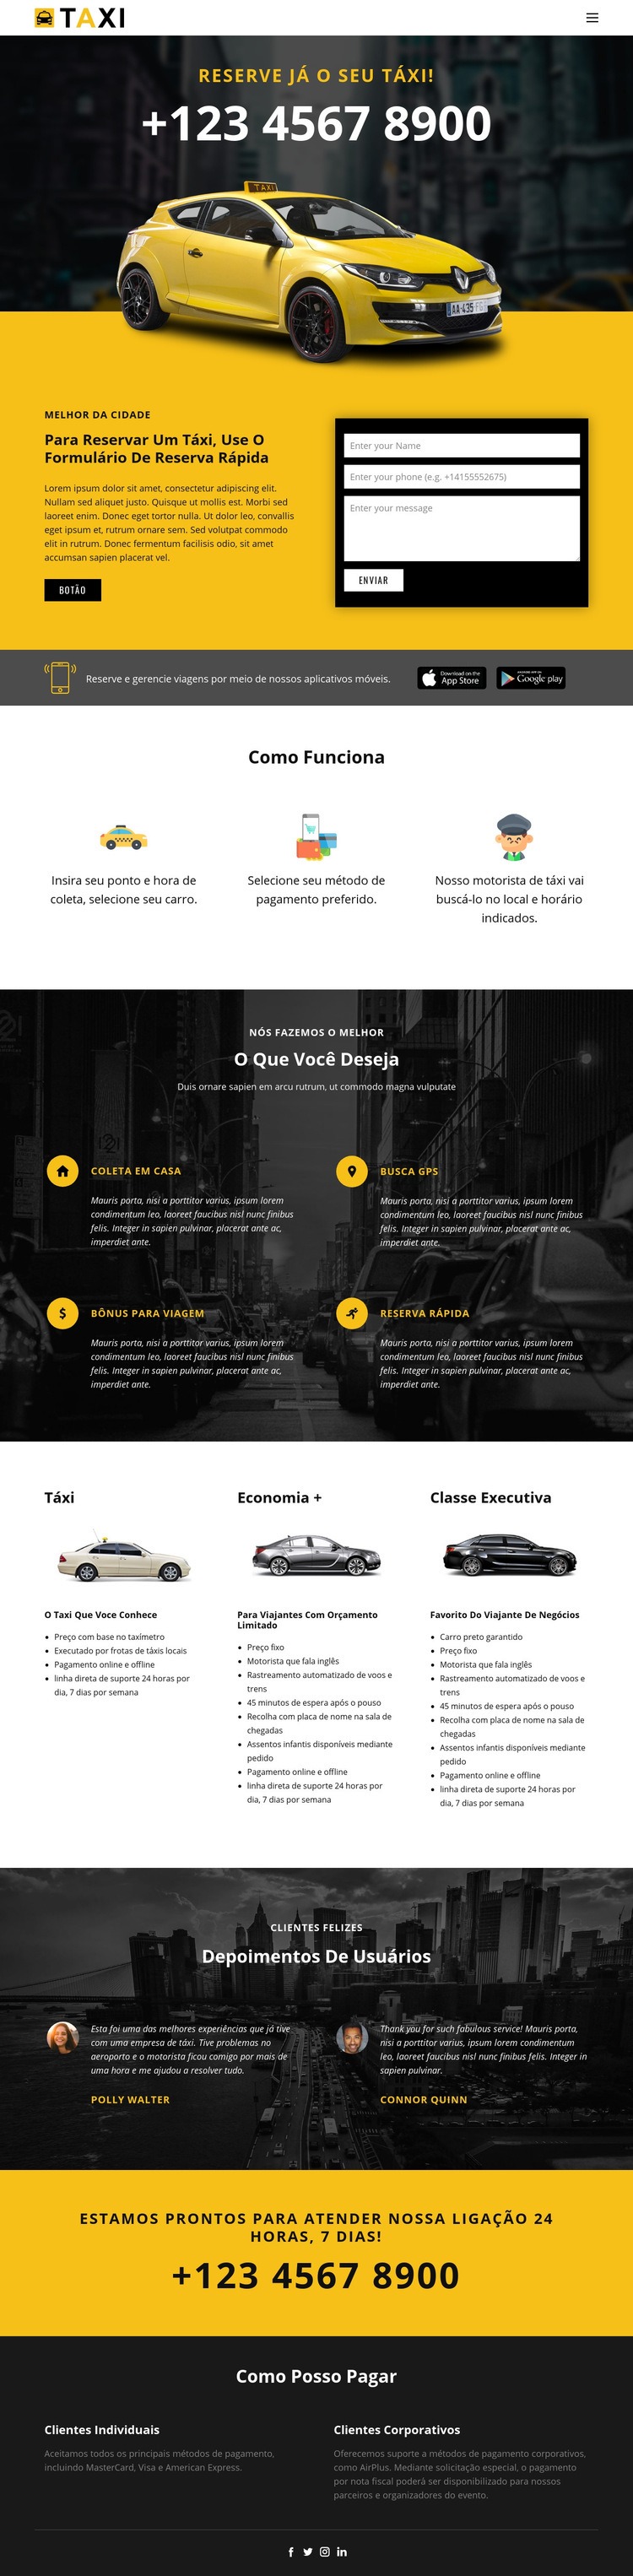 Carros táxi mais rápidos Maquete do site